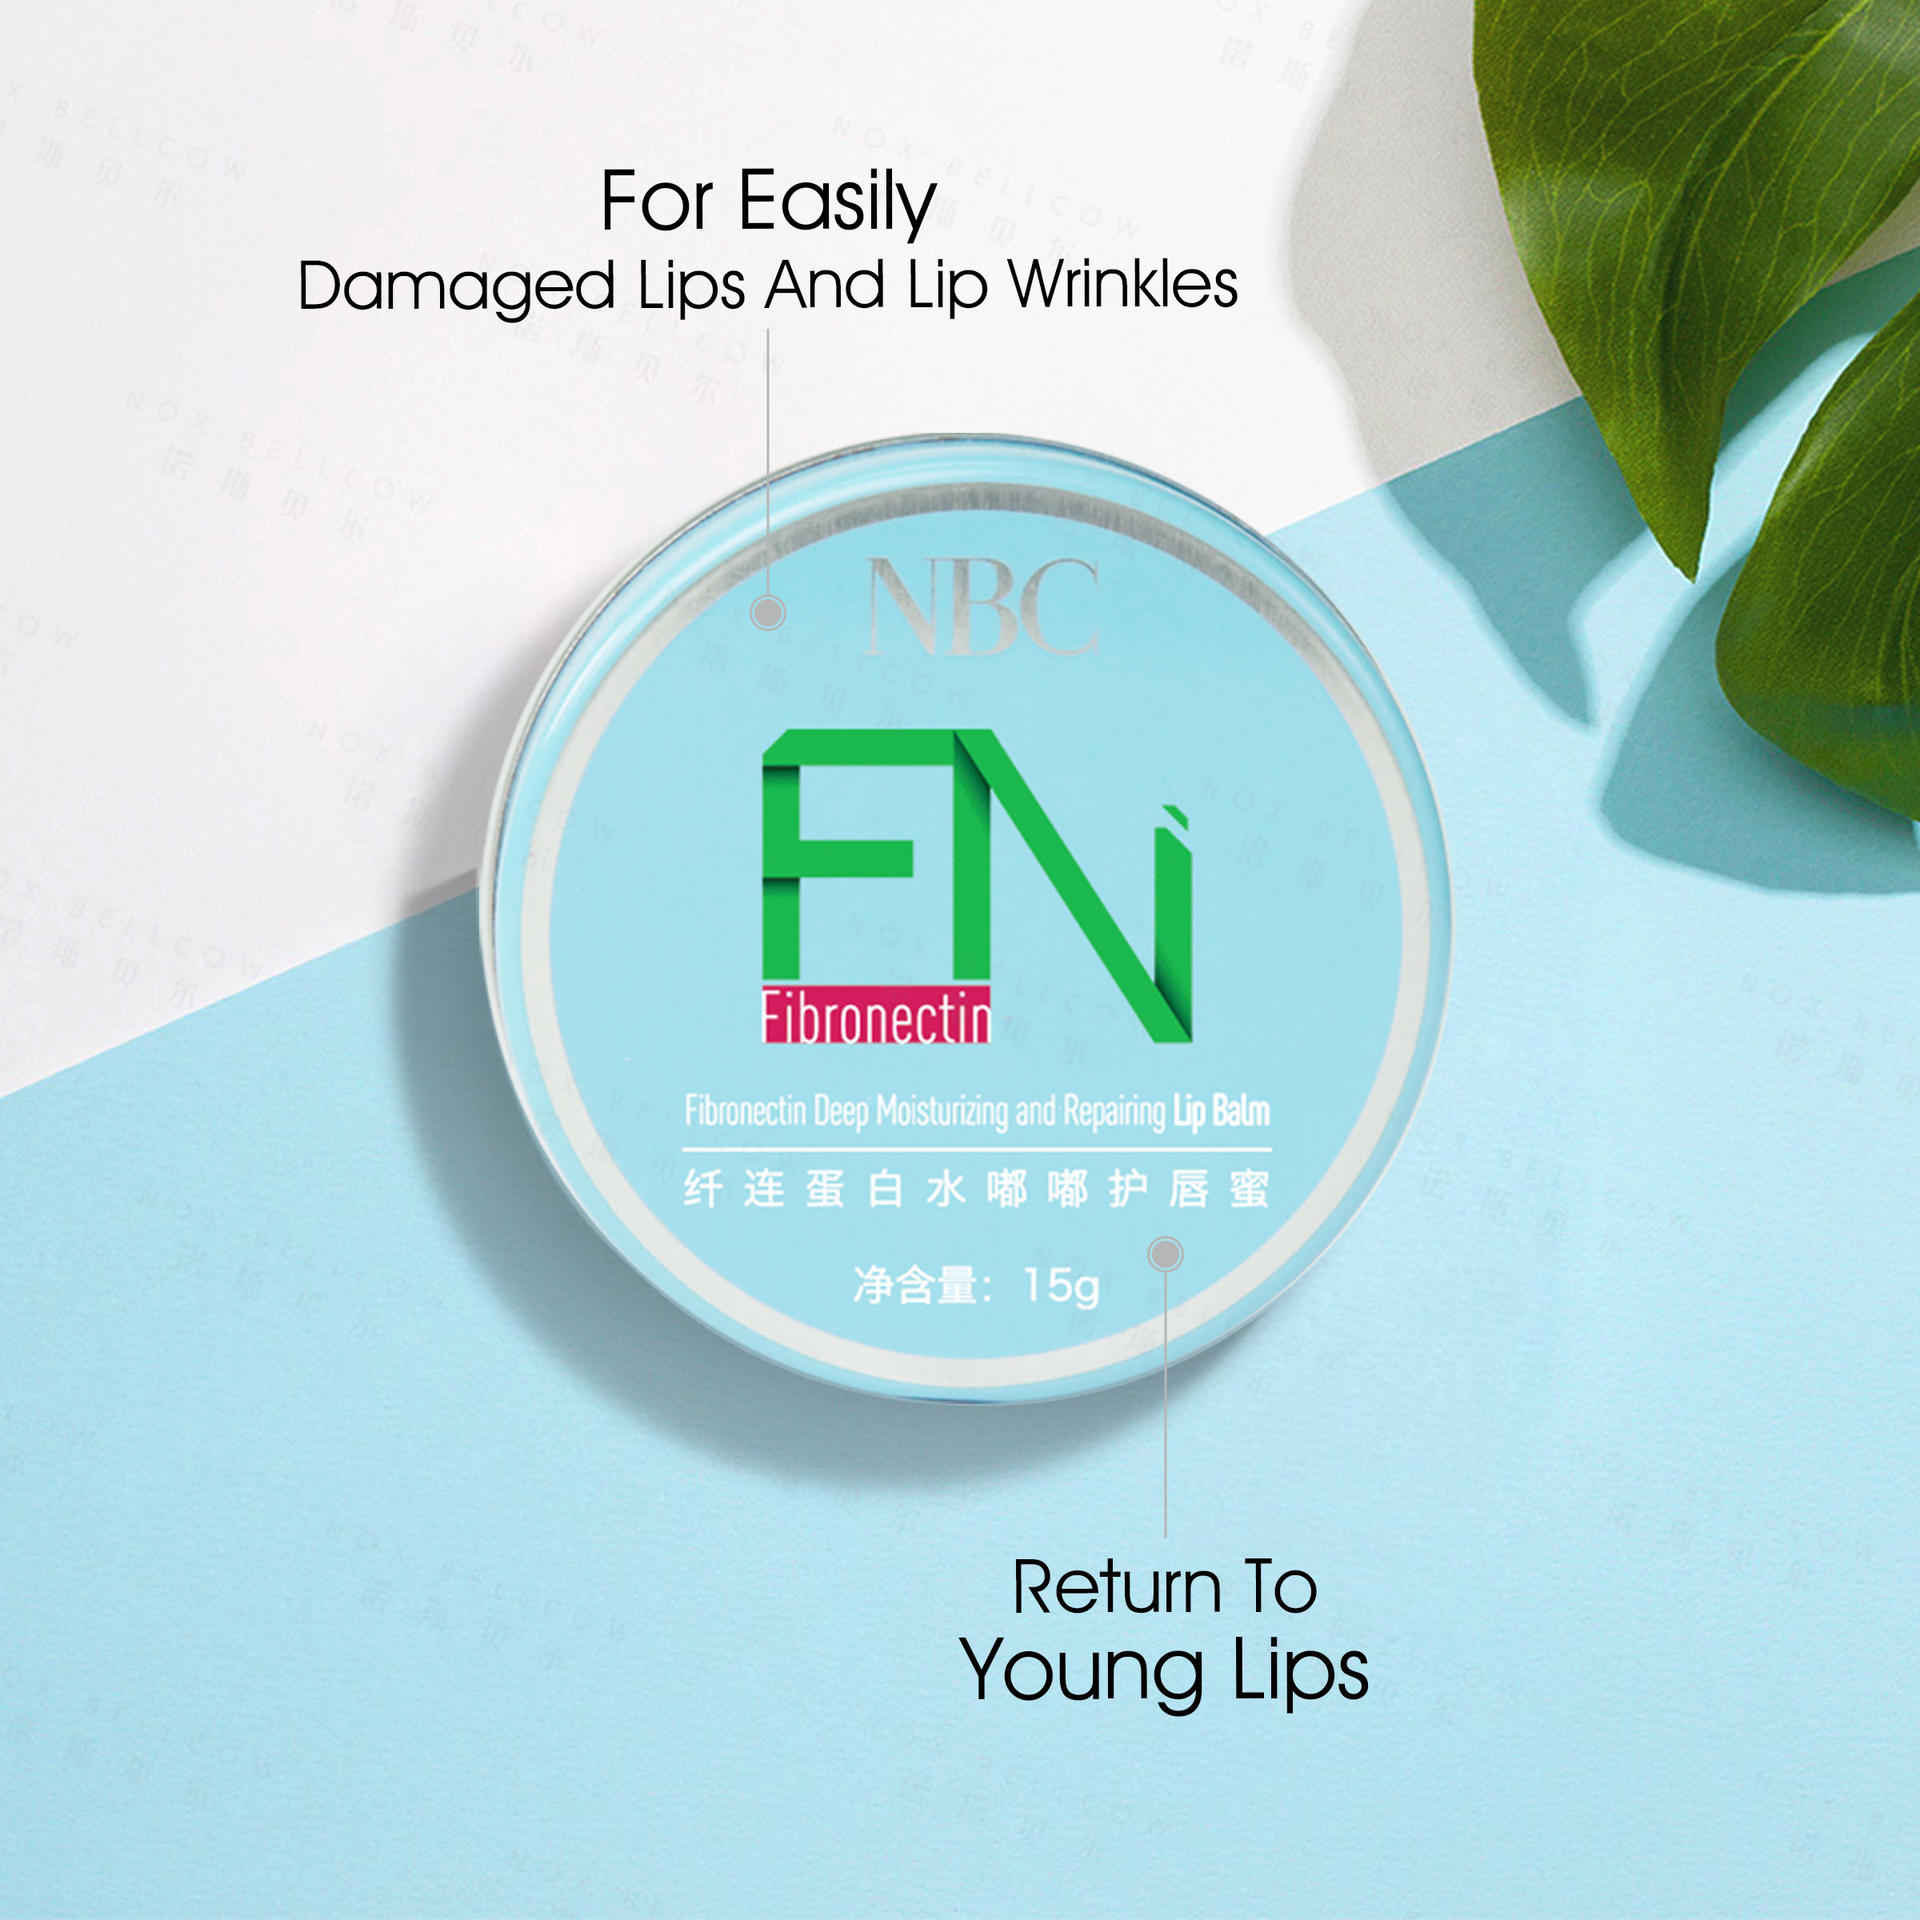 FN (Fibronectin) Deep Moisturizing and Repairing Lip Balm